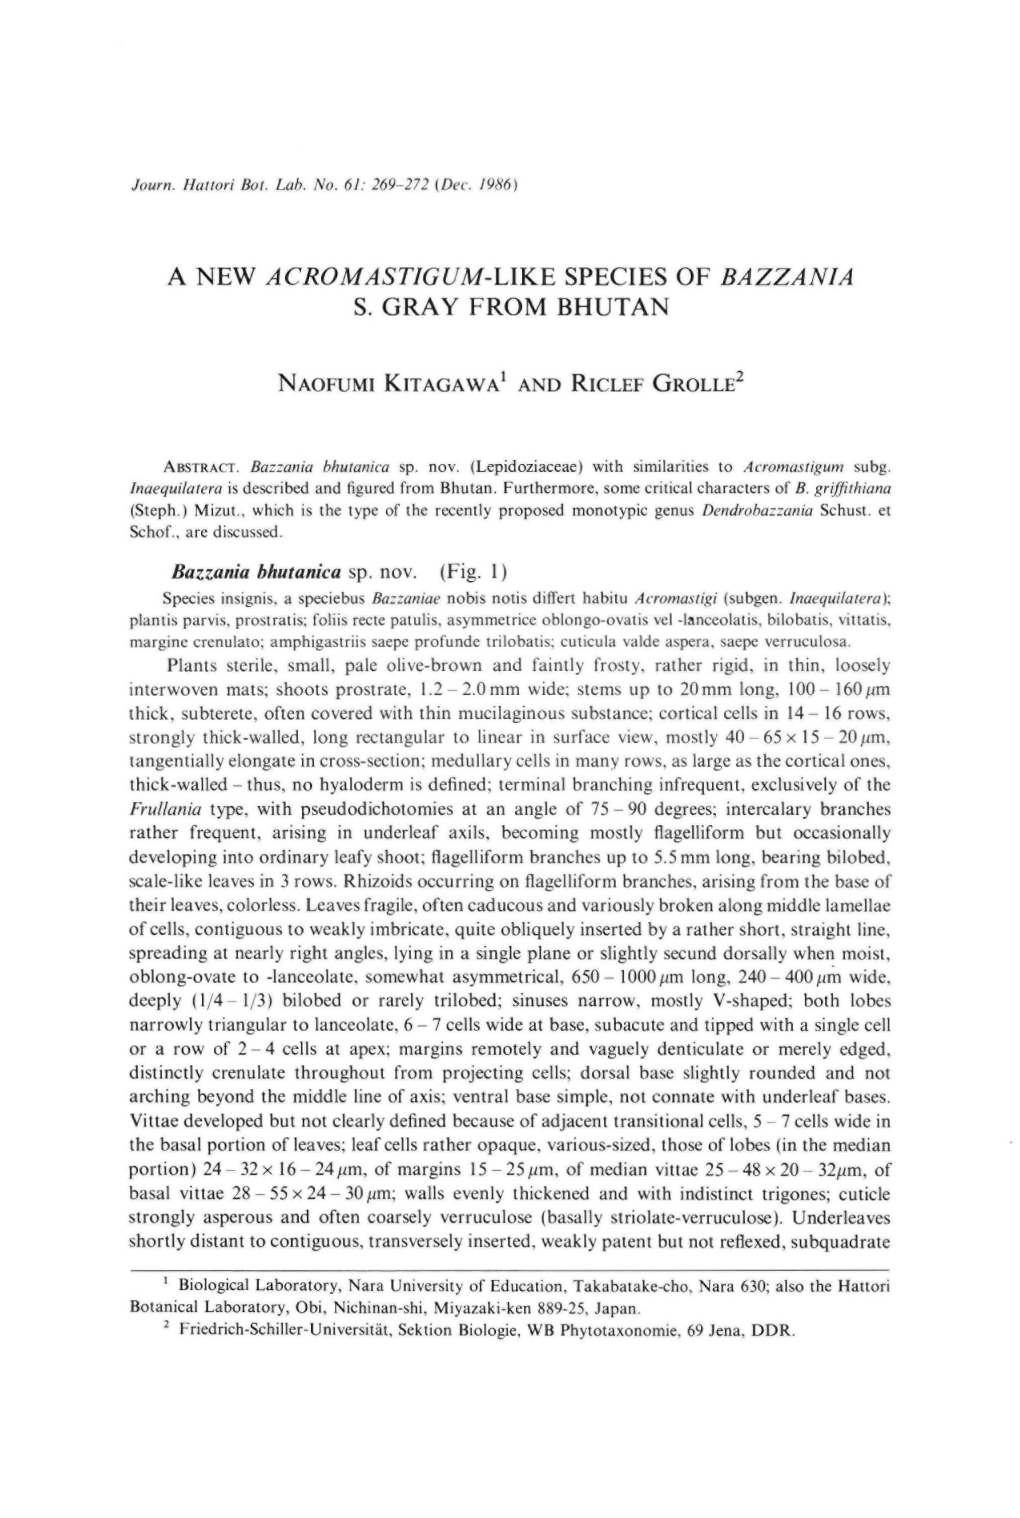 A New Acromastigum-Like Species of Bazzania S